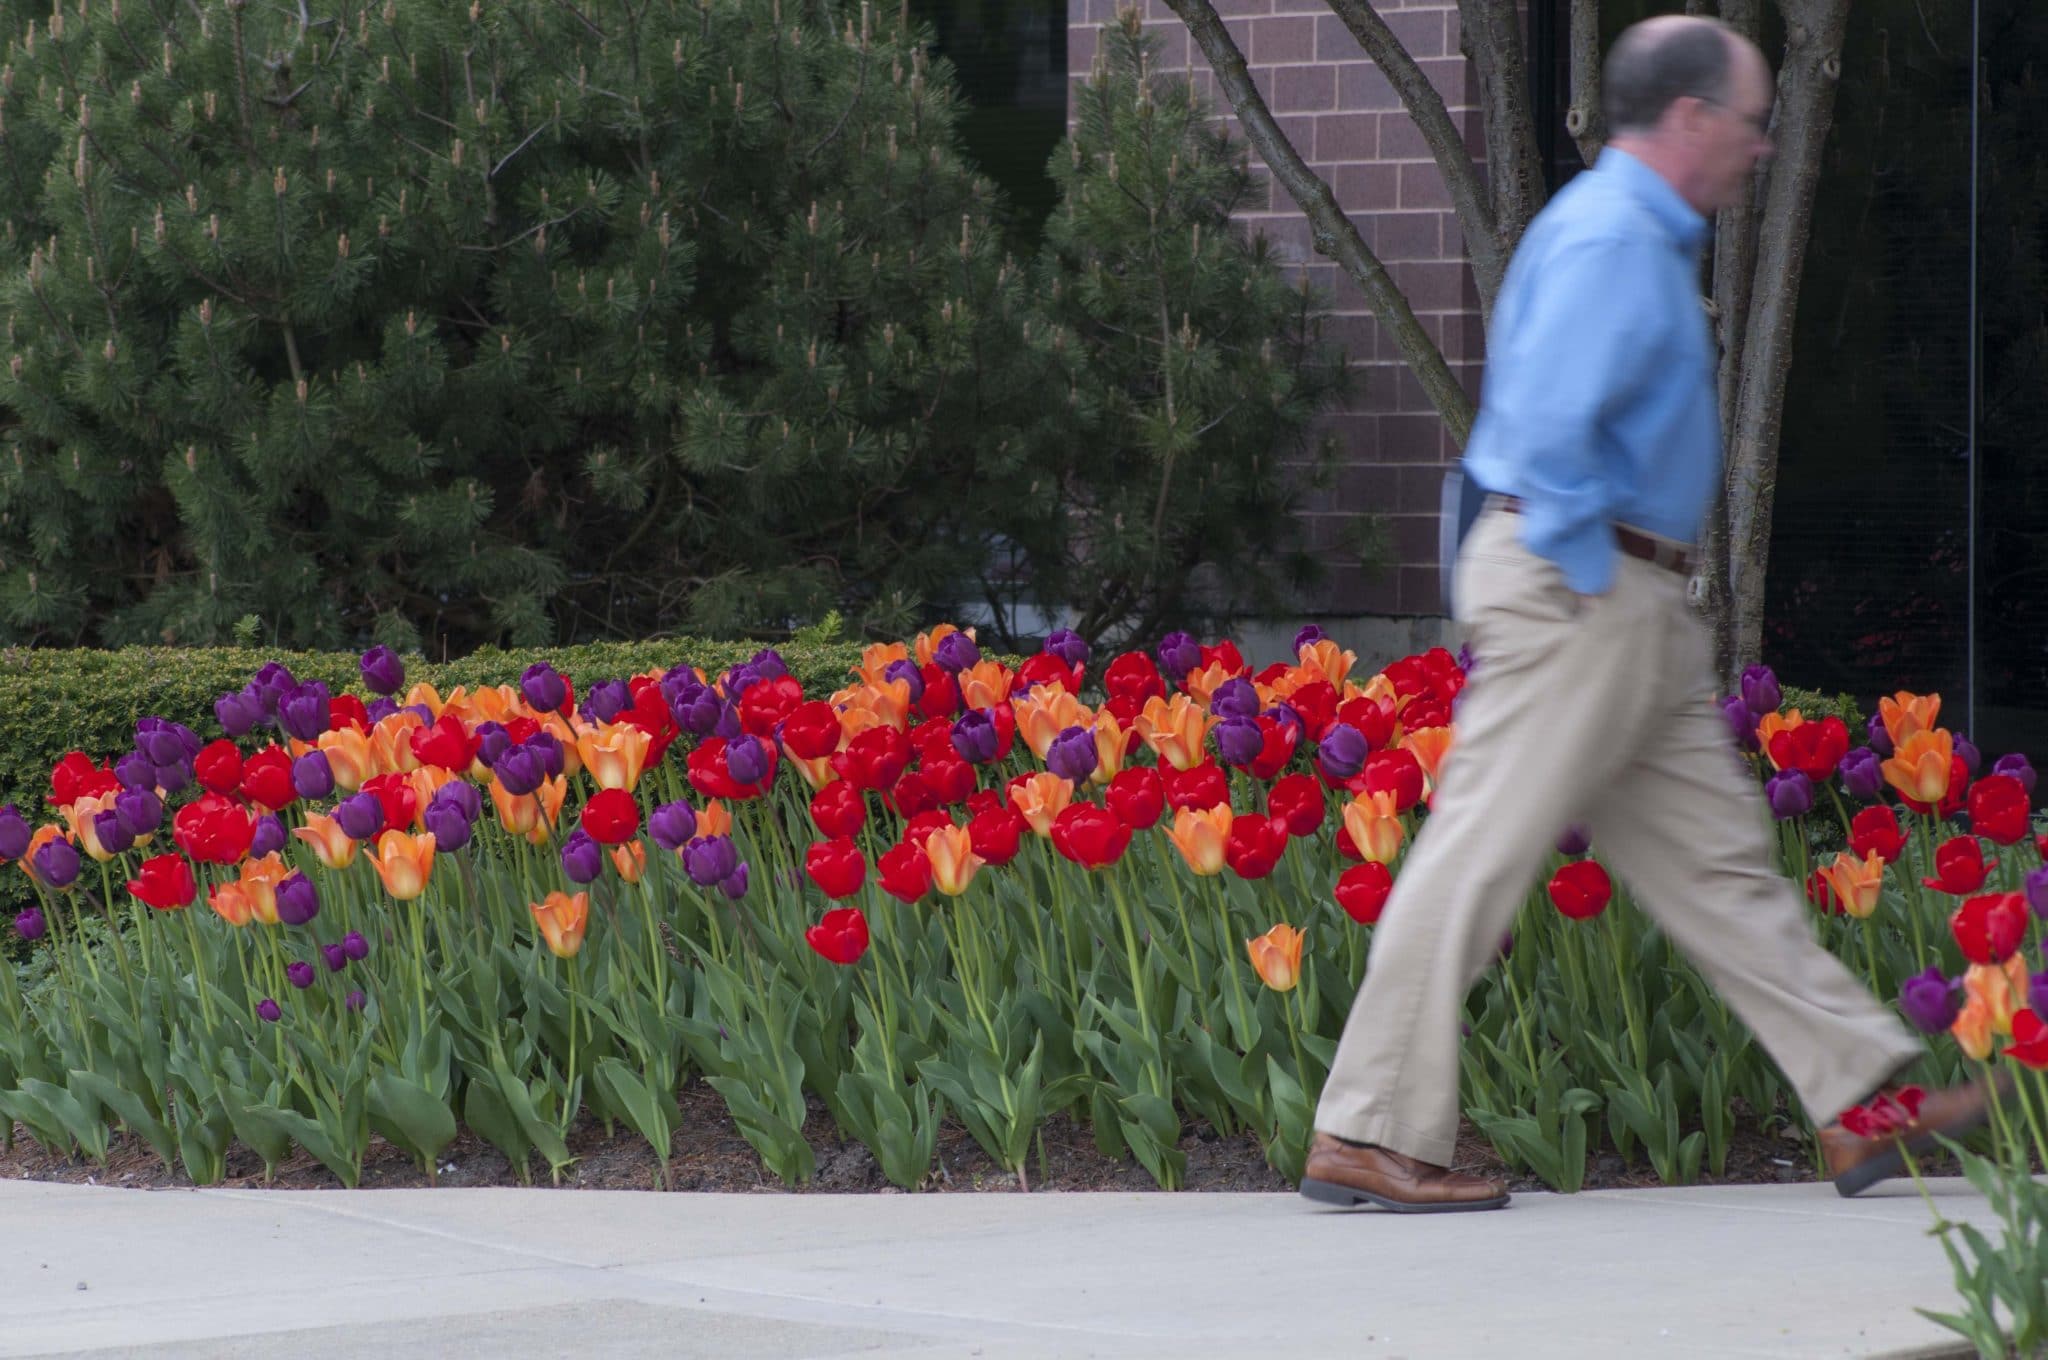 The Rainbow Coalition tulip blend